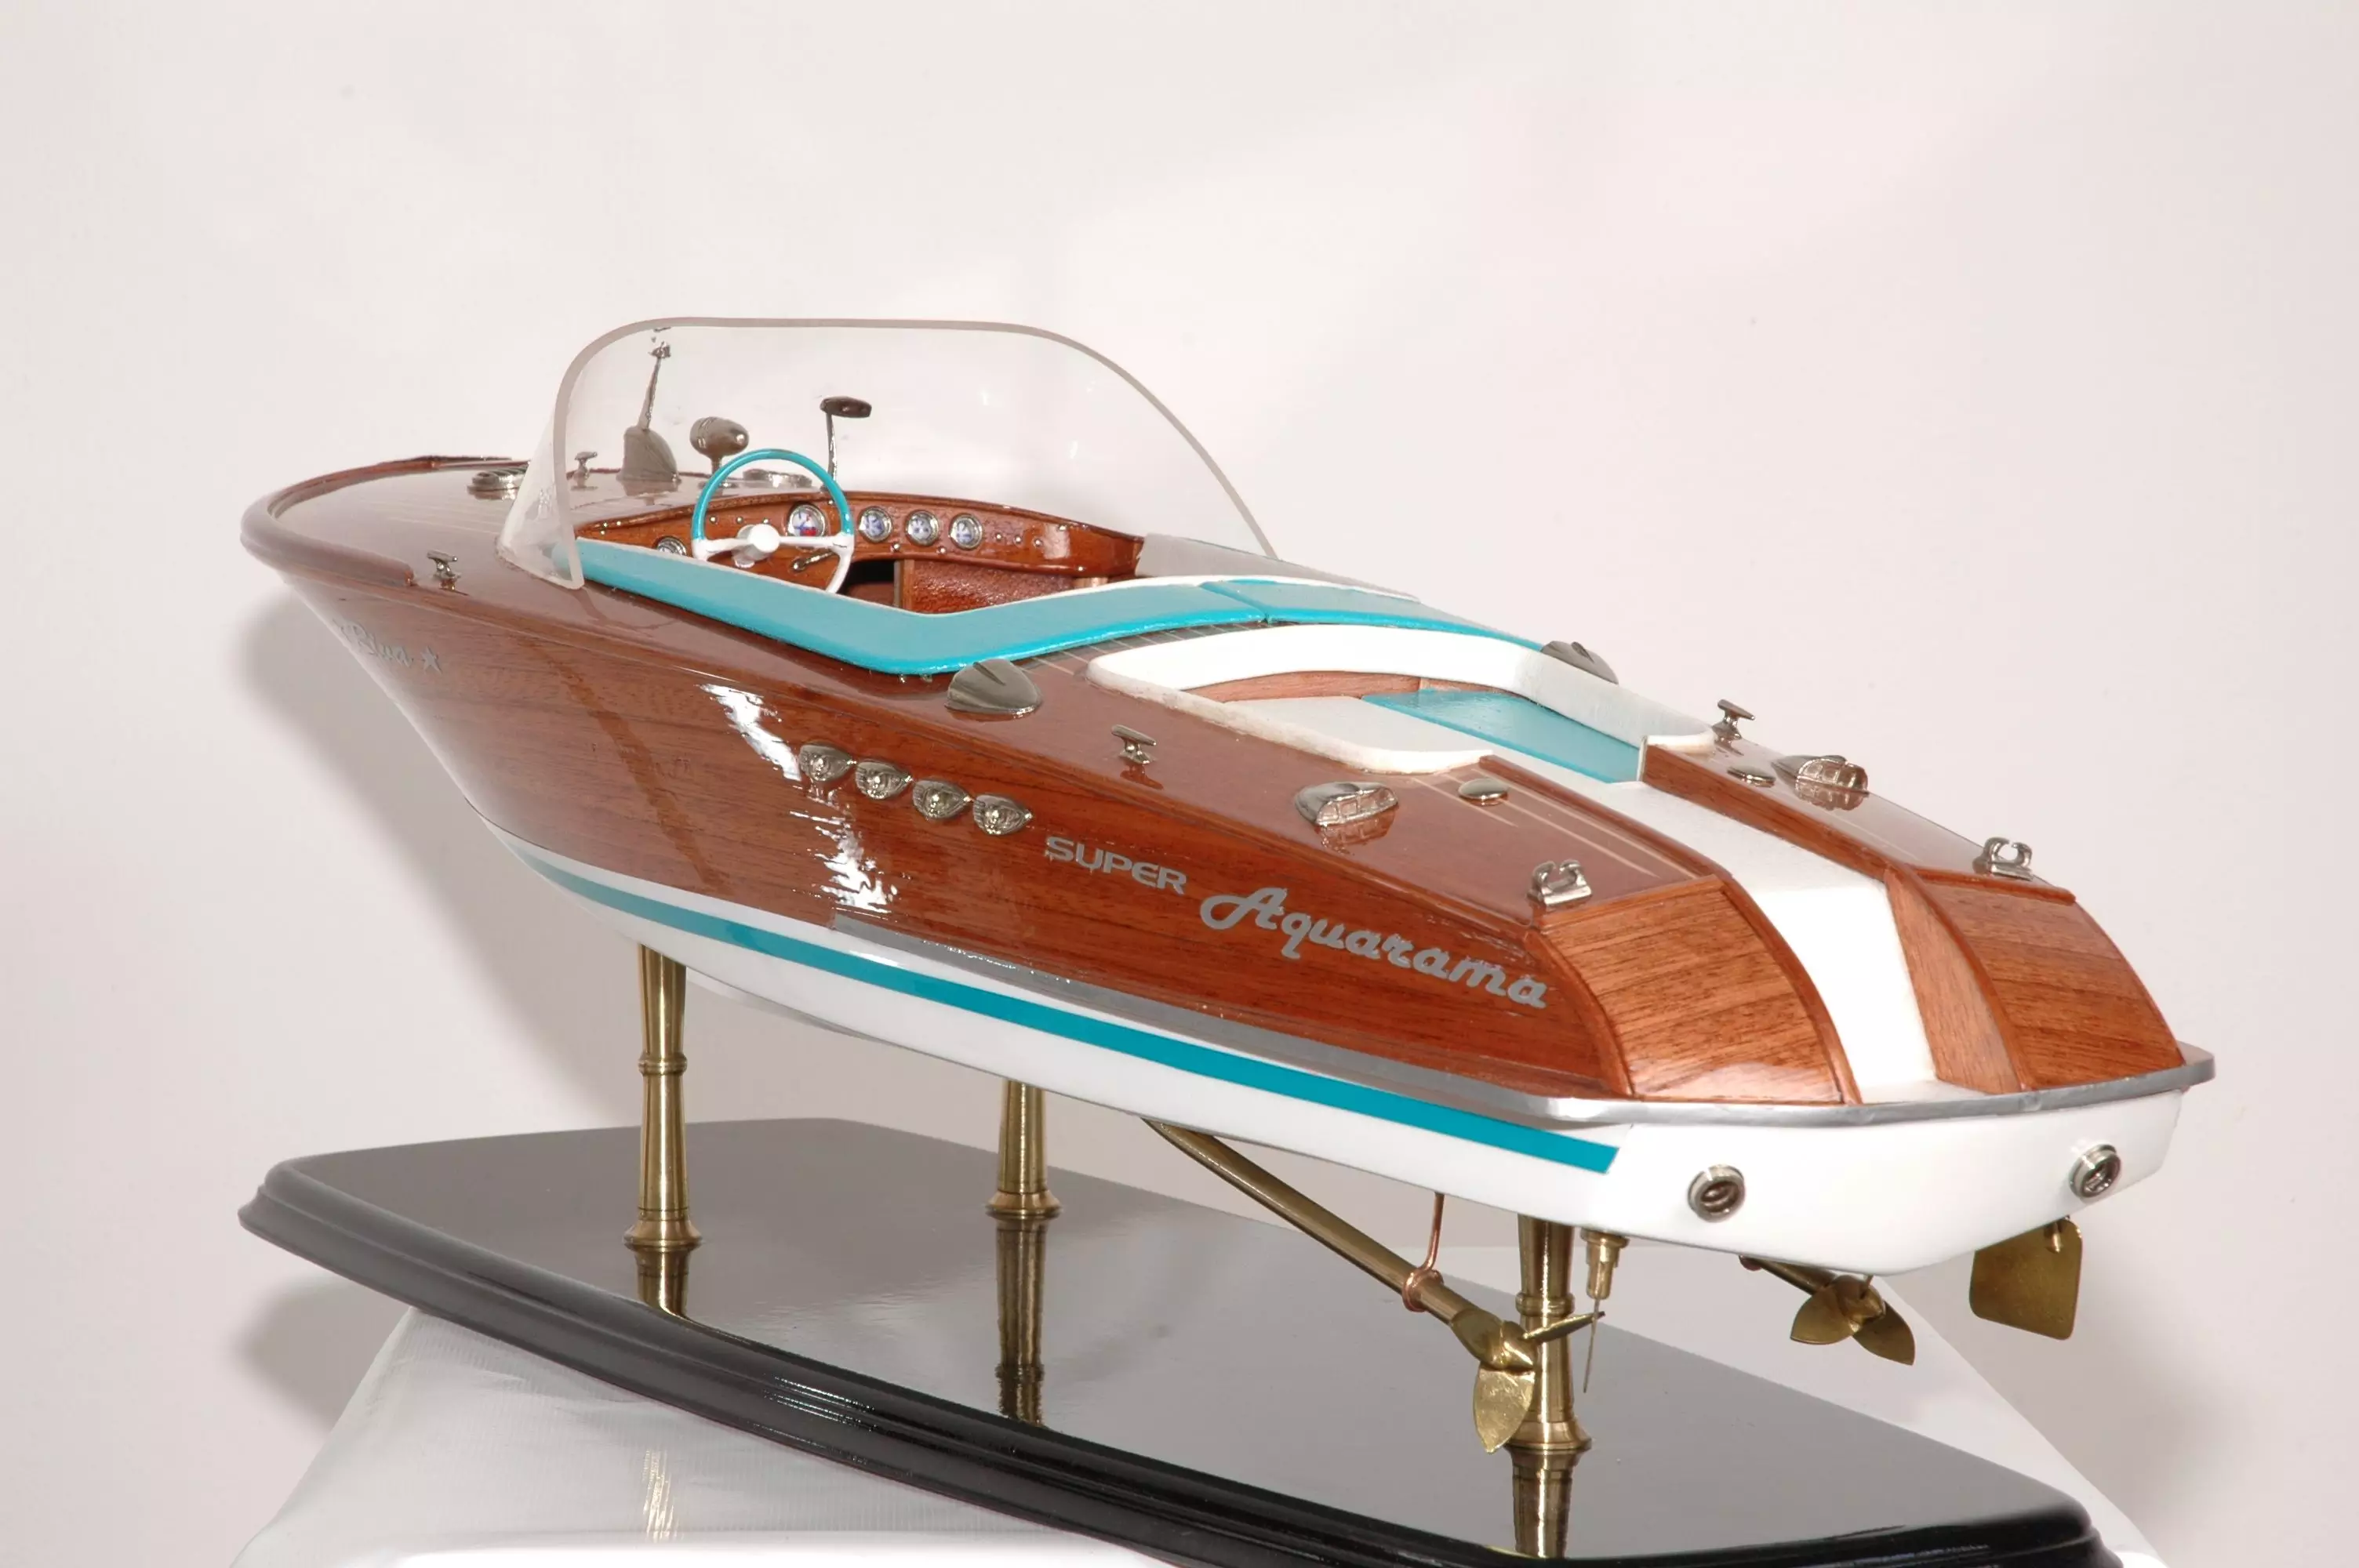 riva super aquarama model boat ,riva,wooden,handcrafted